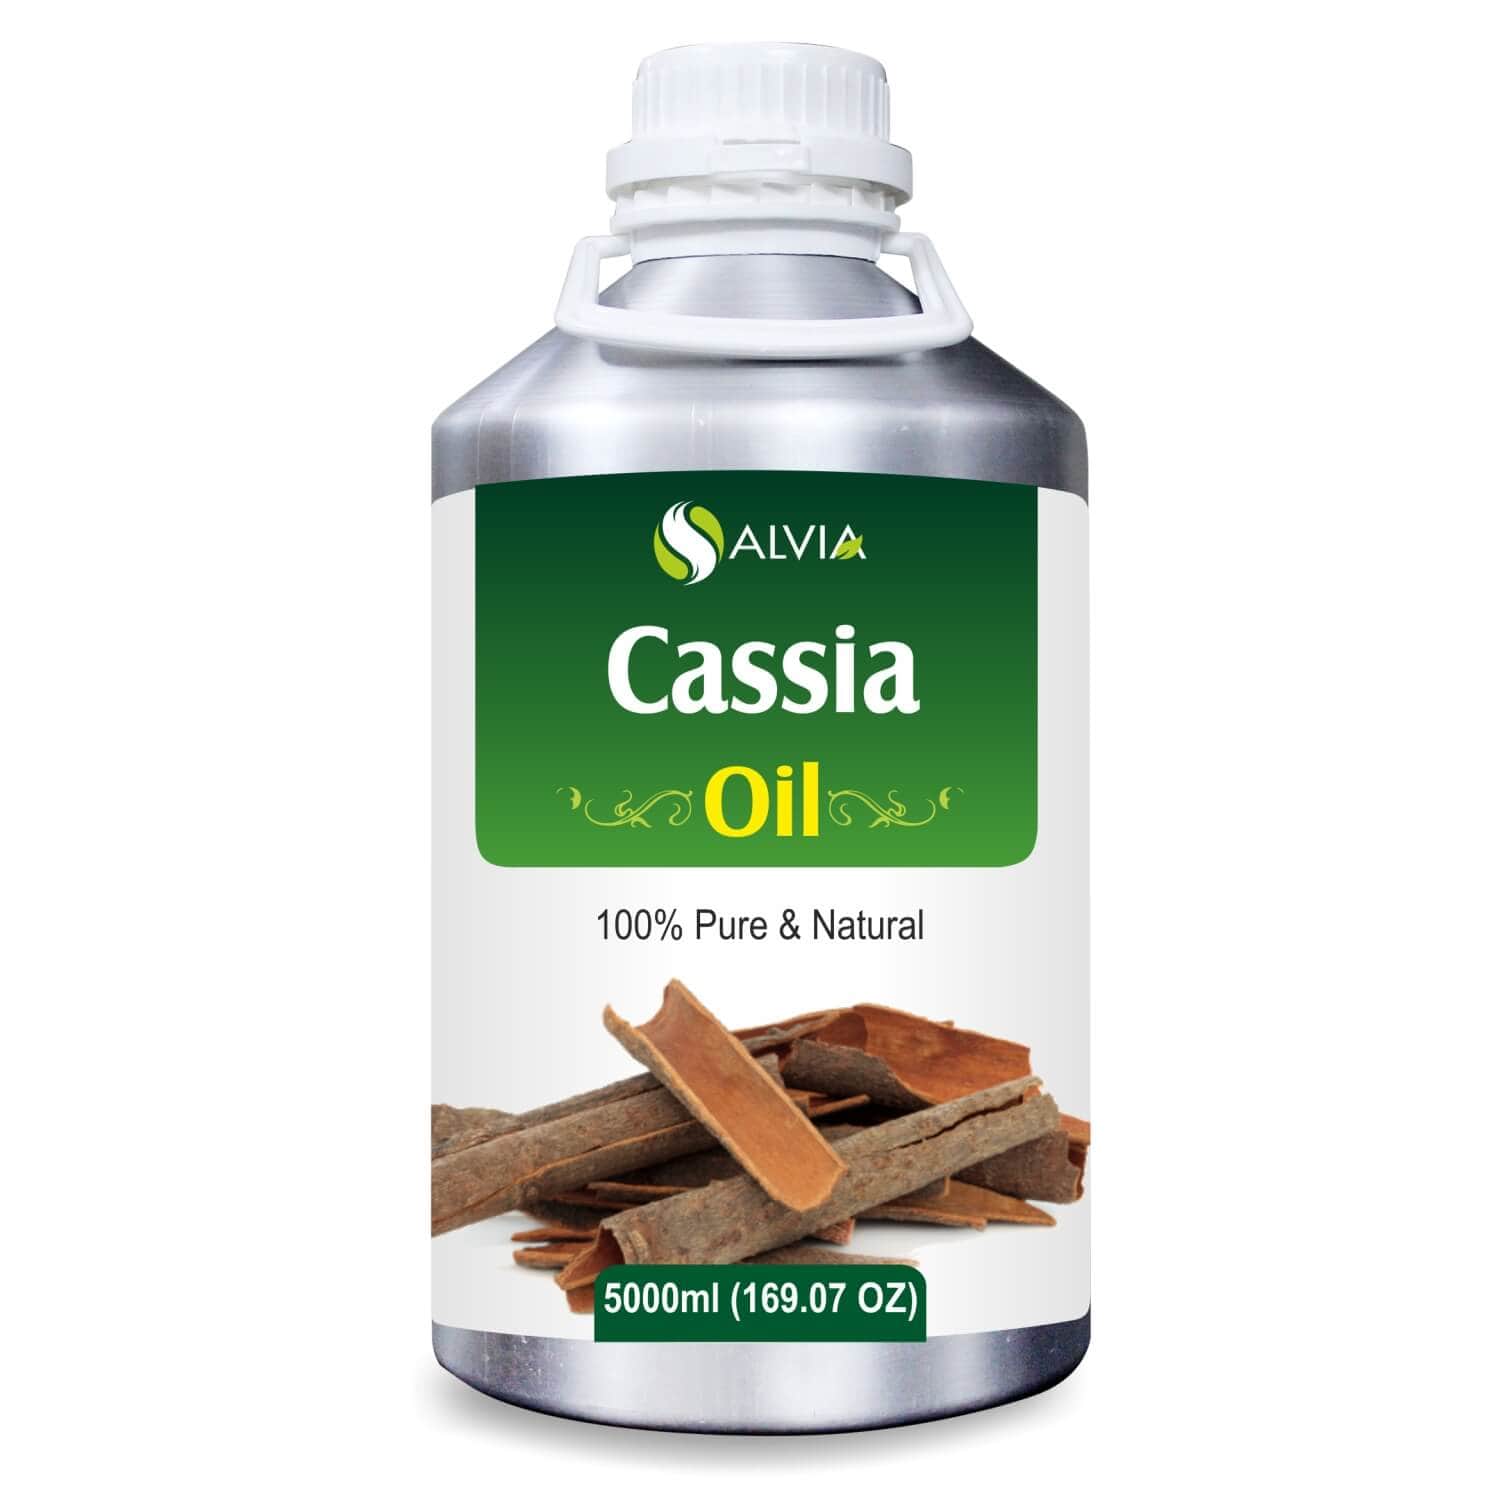 Salvia Natural Essential Oils 5000ml Cassia Oil (Cassia fistula) 100% Natural Pure Essential Oil For Joint Pain, Reduces Arthritis Pain, Alleviates Stress, Treats Acne, And More